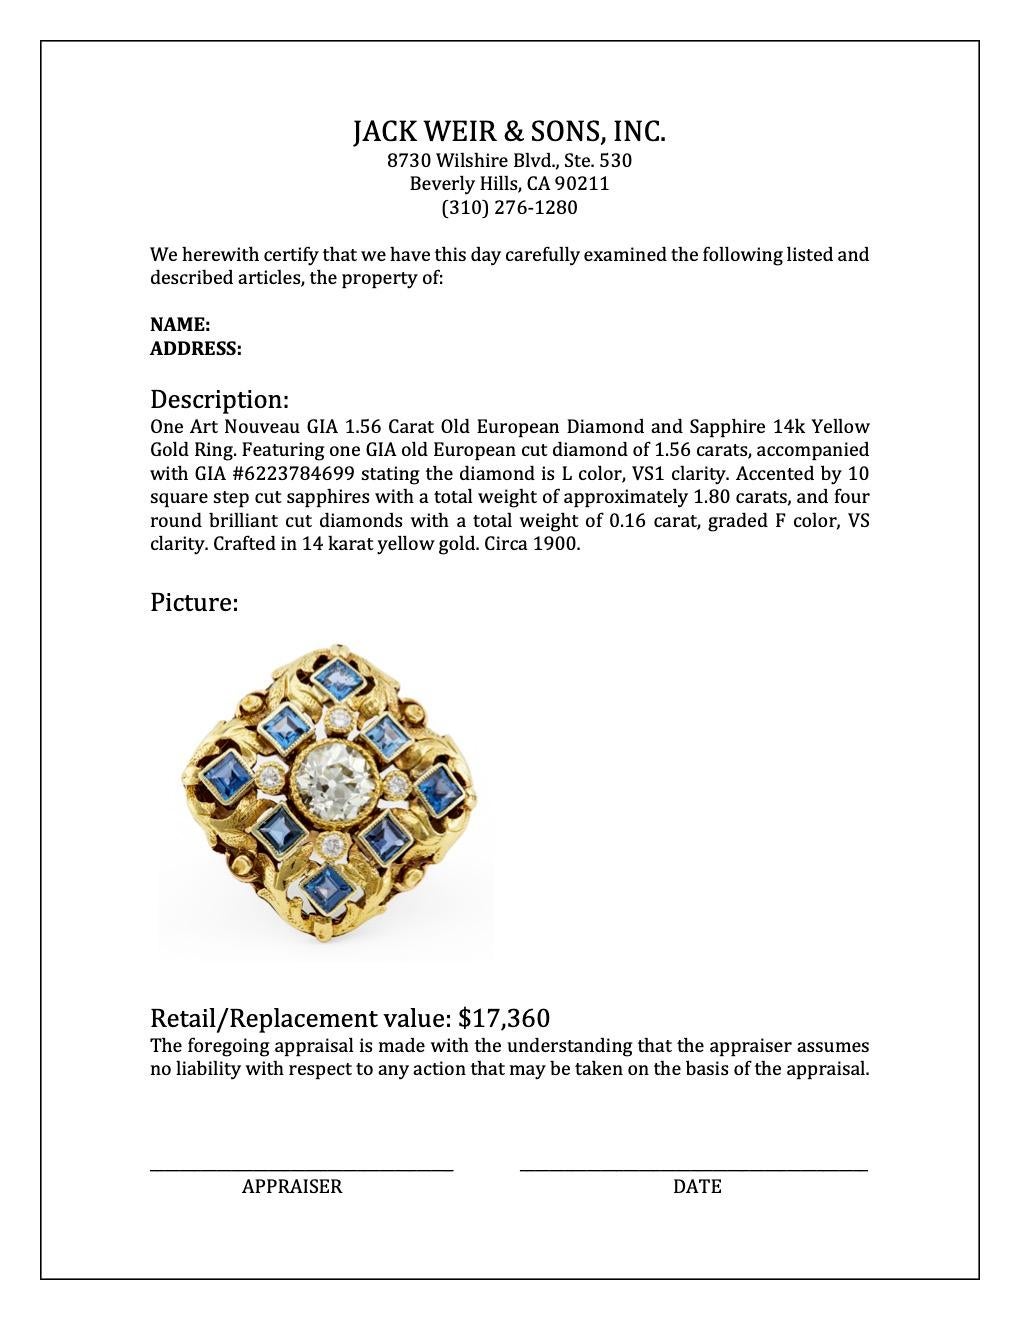 Art Nouveau GIA 1.56 Carat Old European Diamond and Sapphire 14k Gold Ring 2